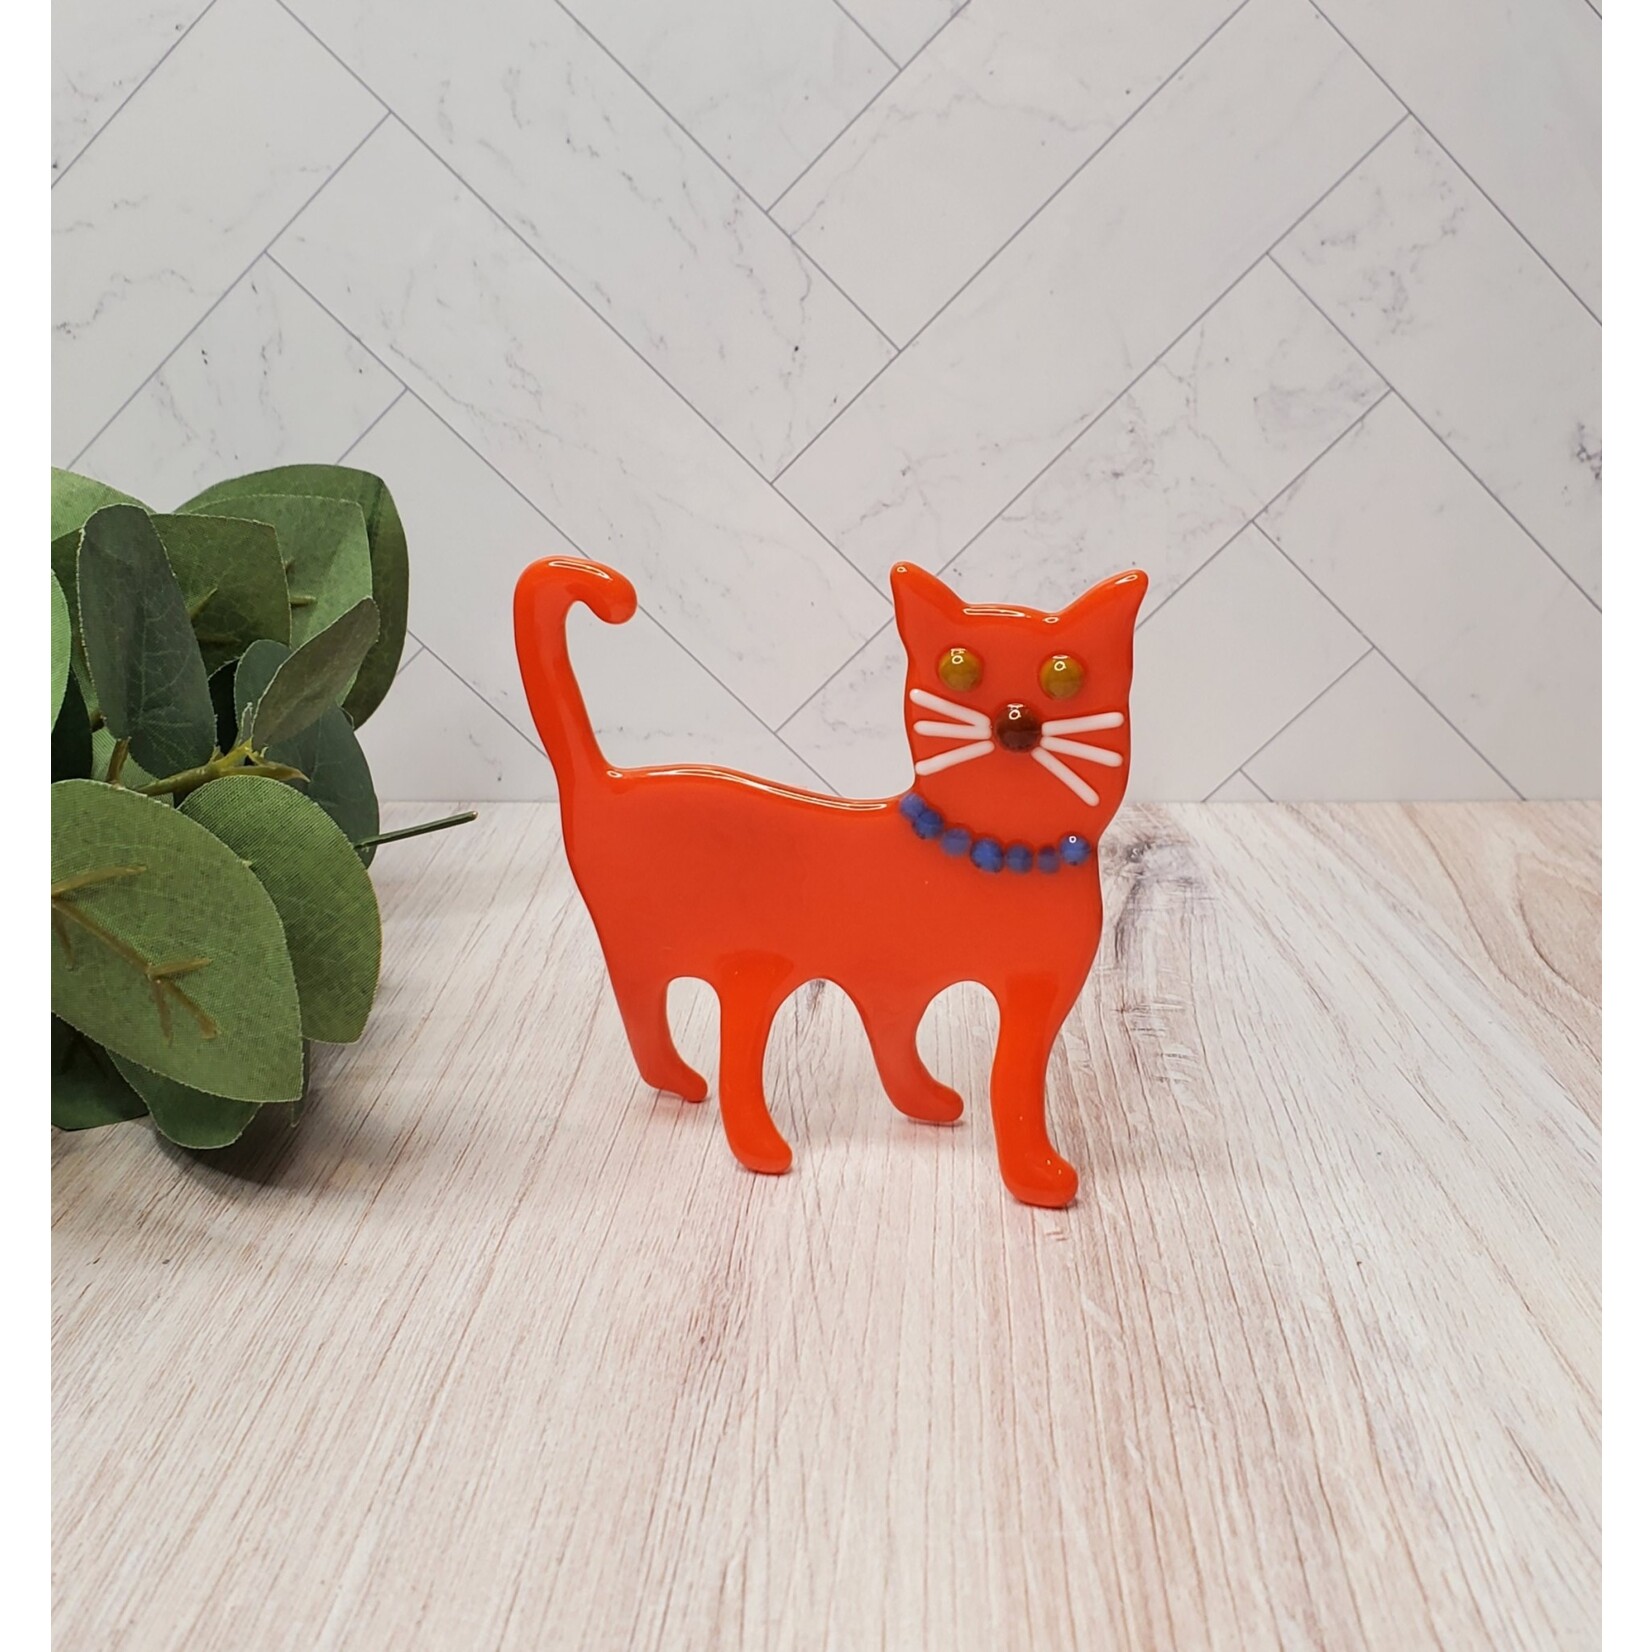 Glas Rat Art Glass Dancing Cat - Orange - Fused Glass